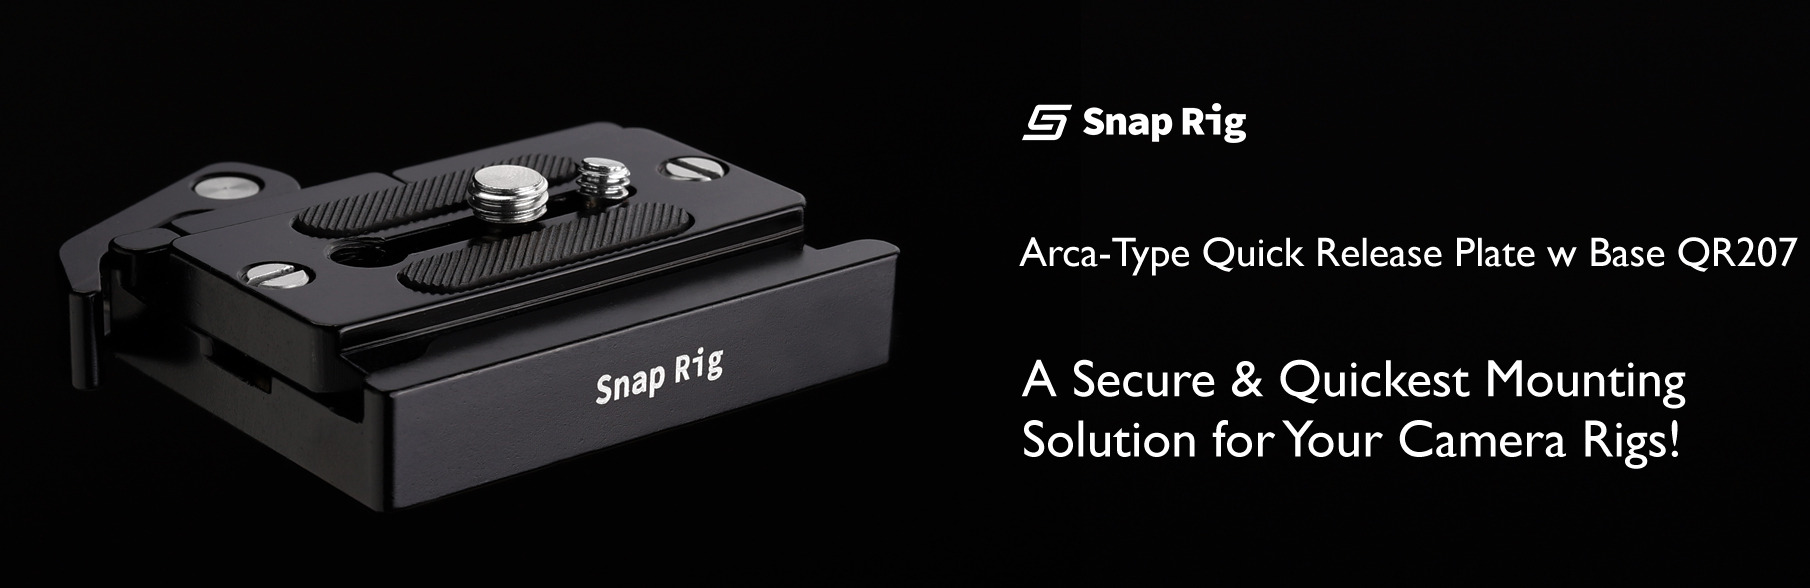 Proaim SnapRig Arca-Type Quick Release Plate w Base QR207